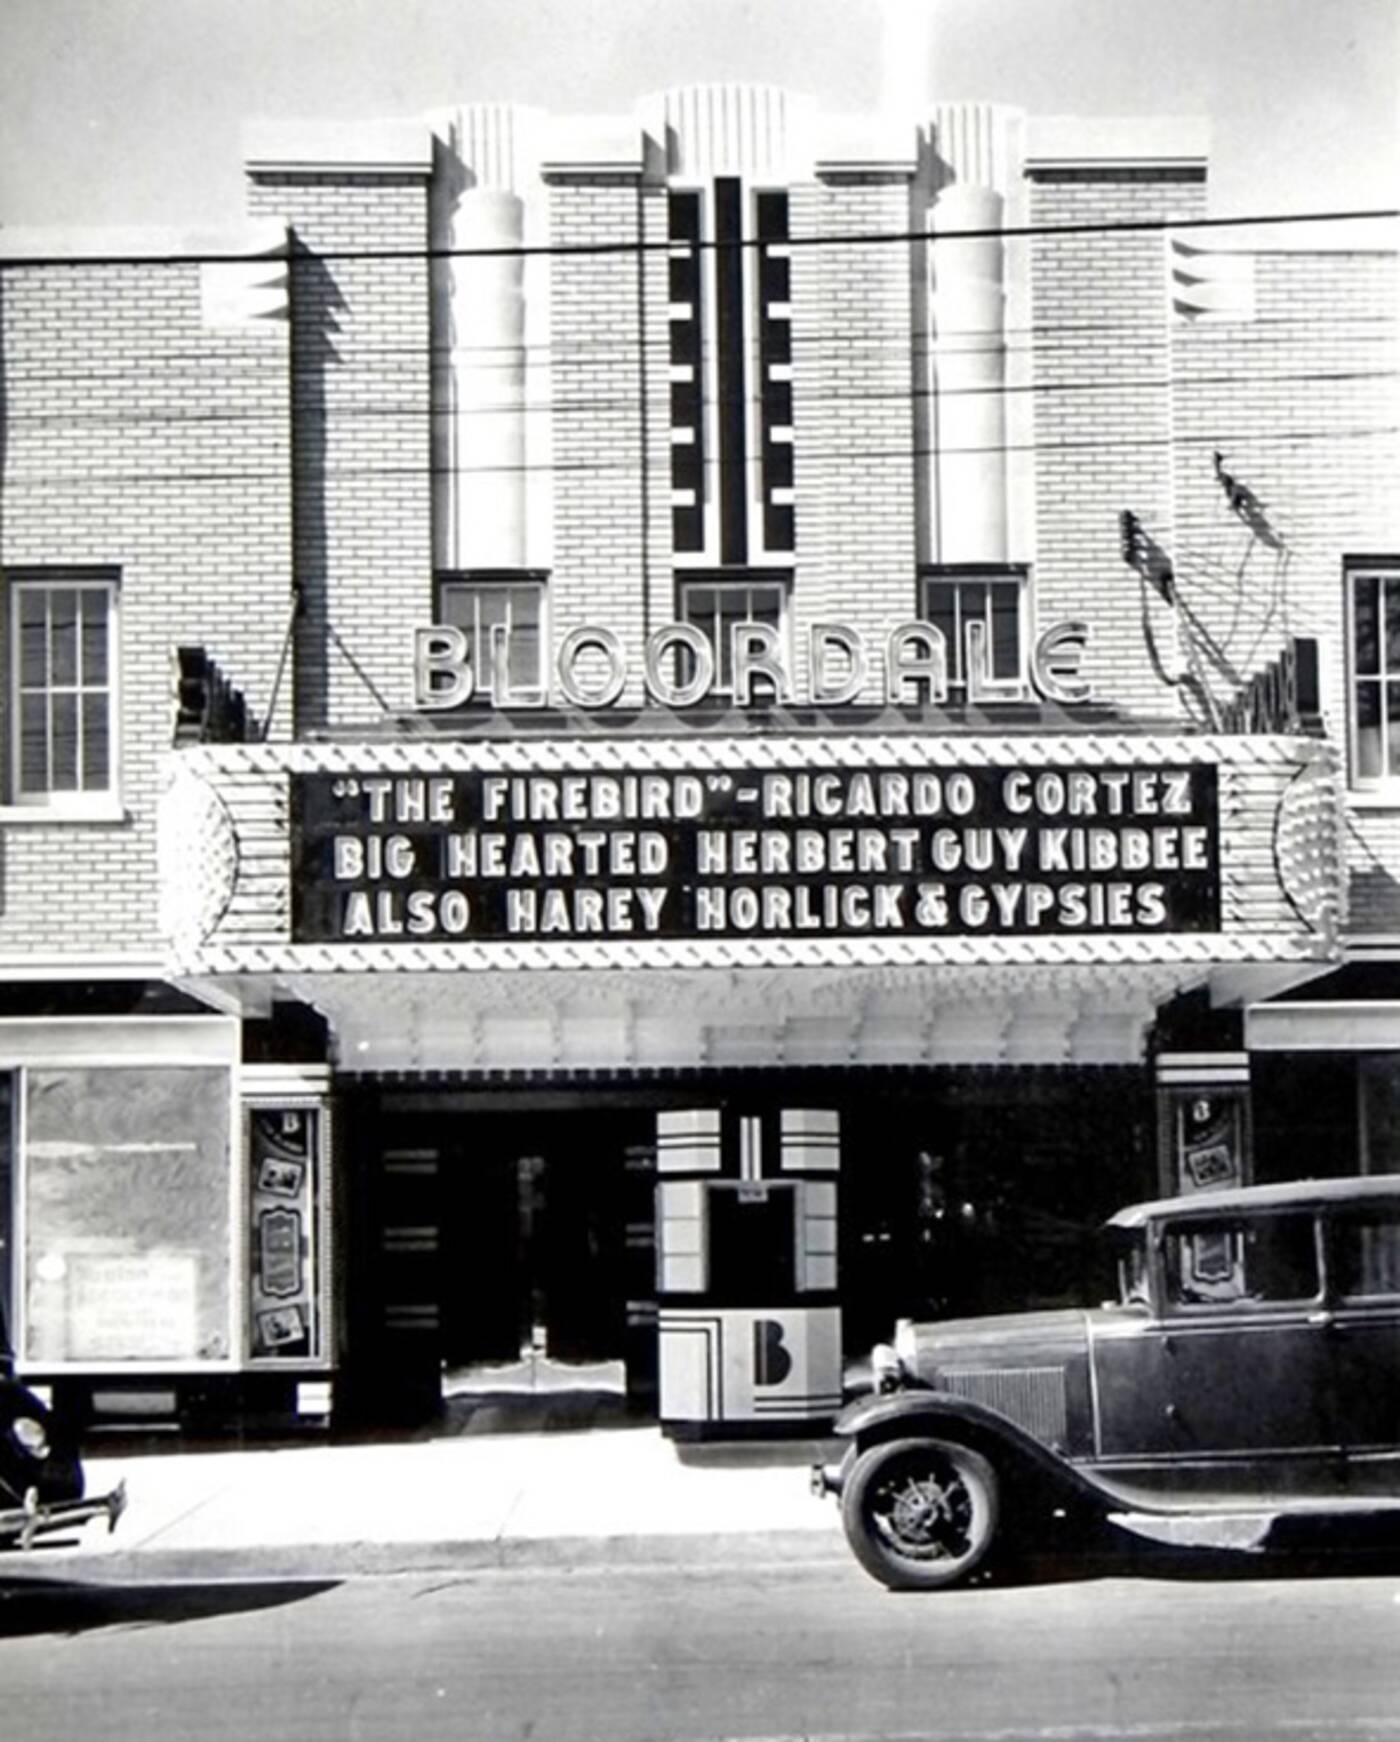 Bloordale Theatre